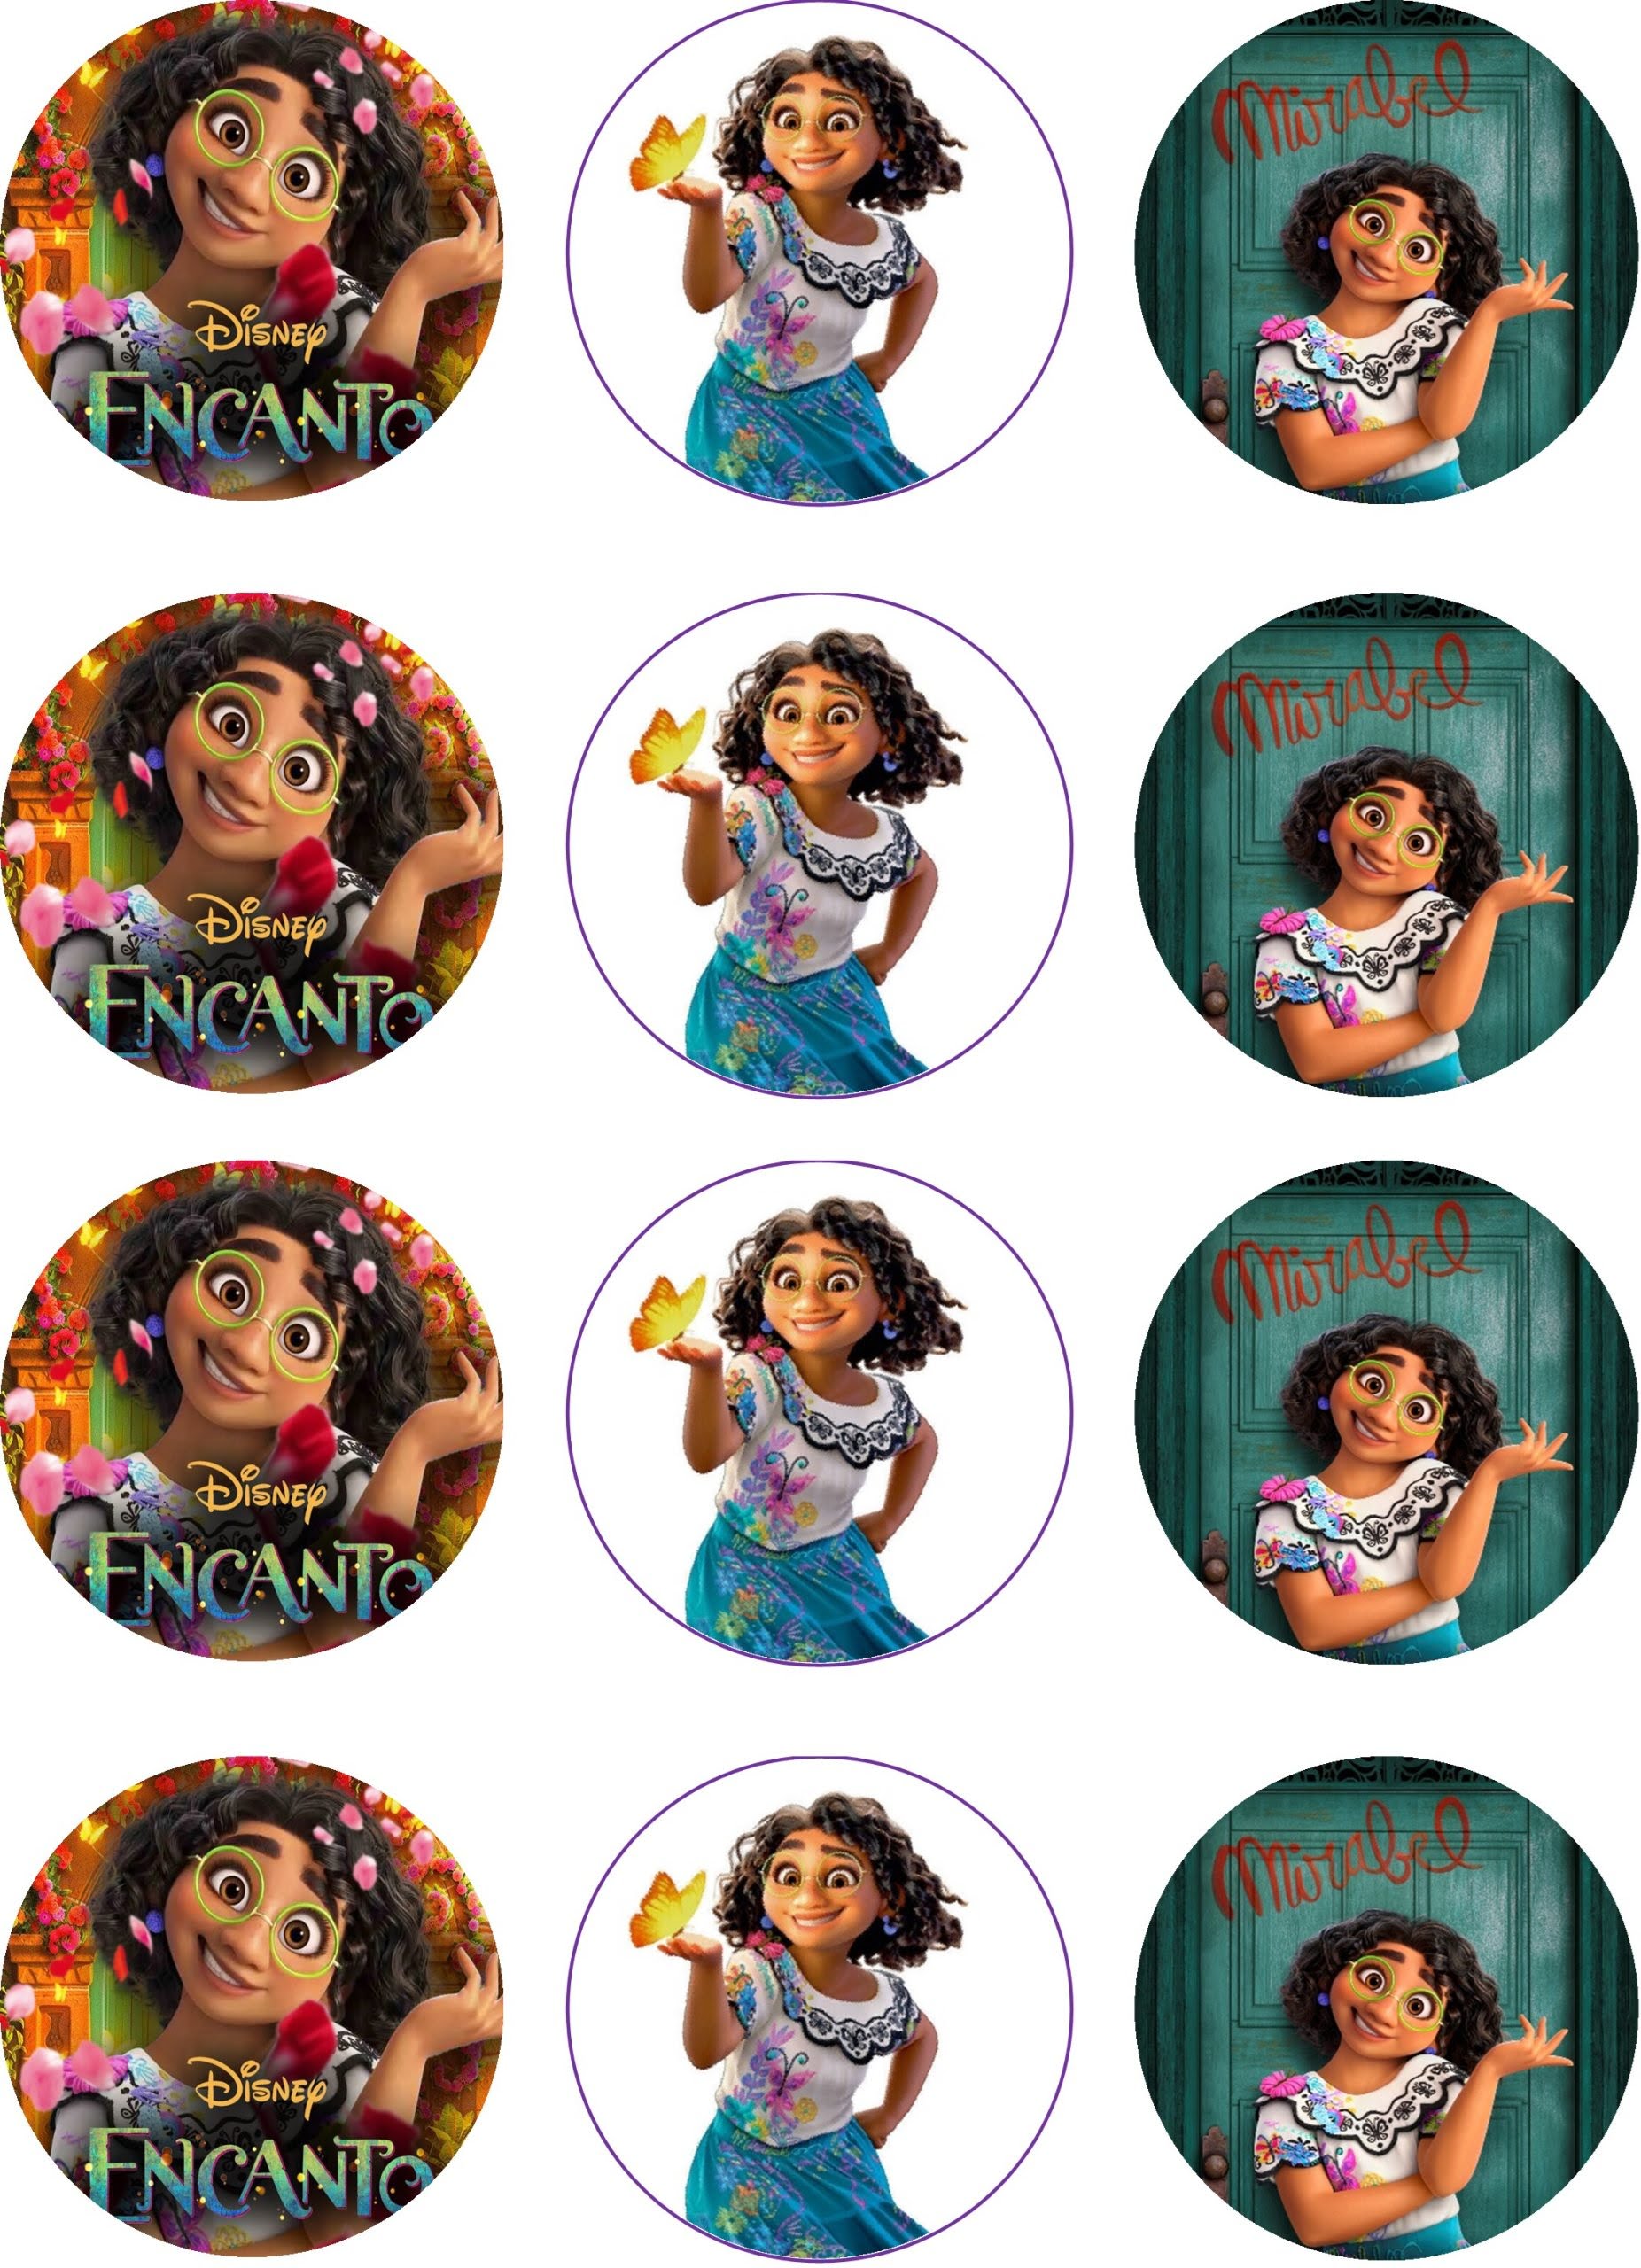 Free Printable Encanto Cupcake Toppers